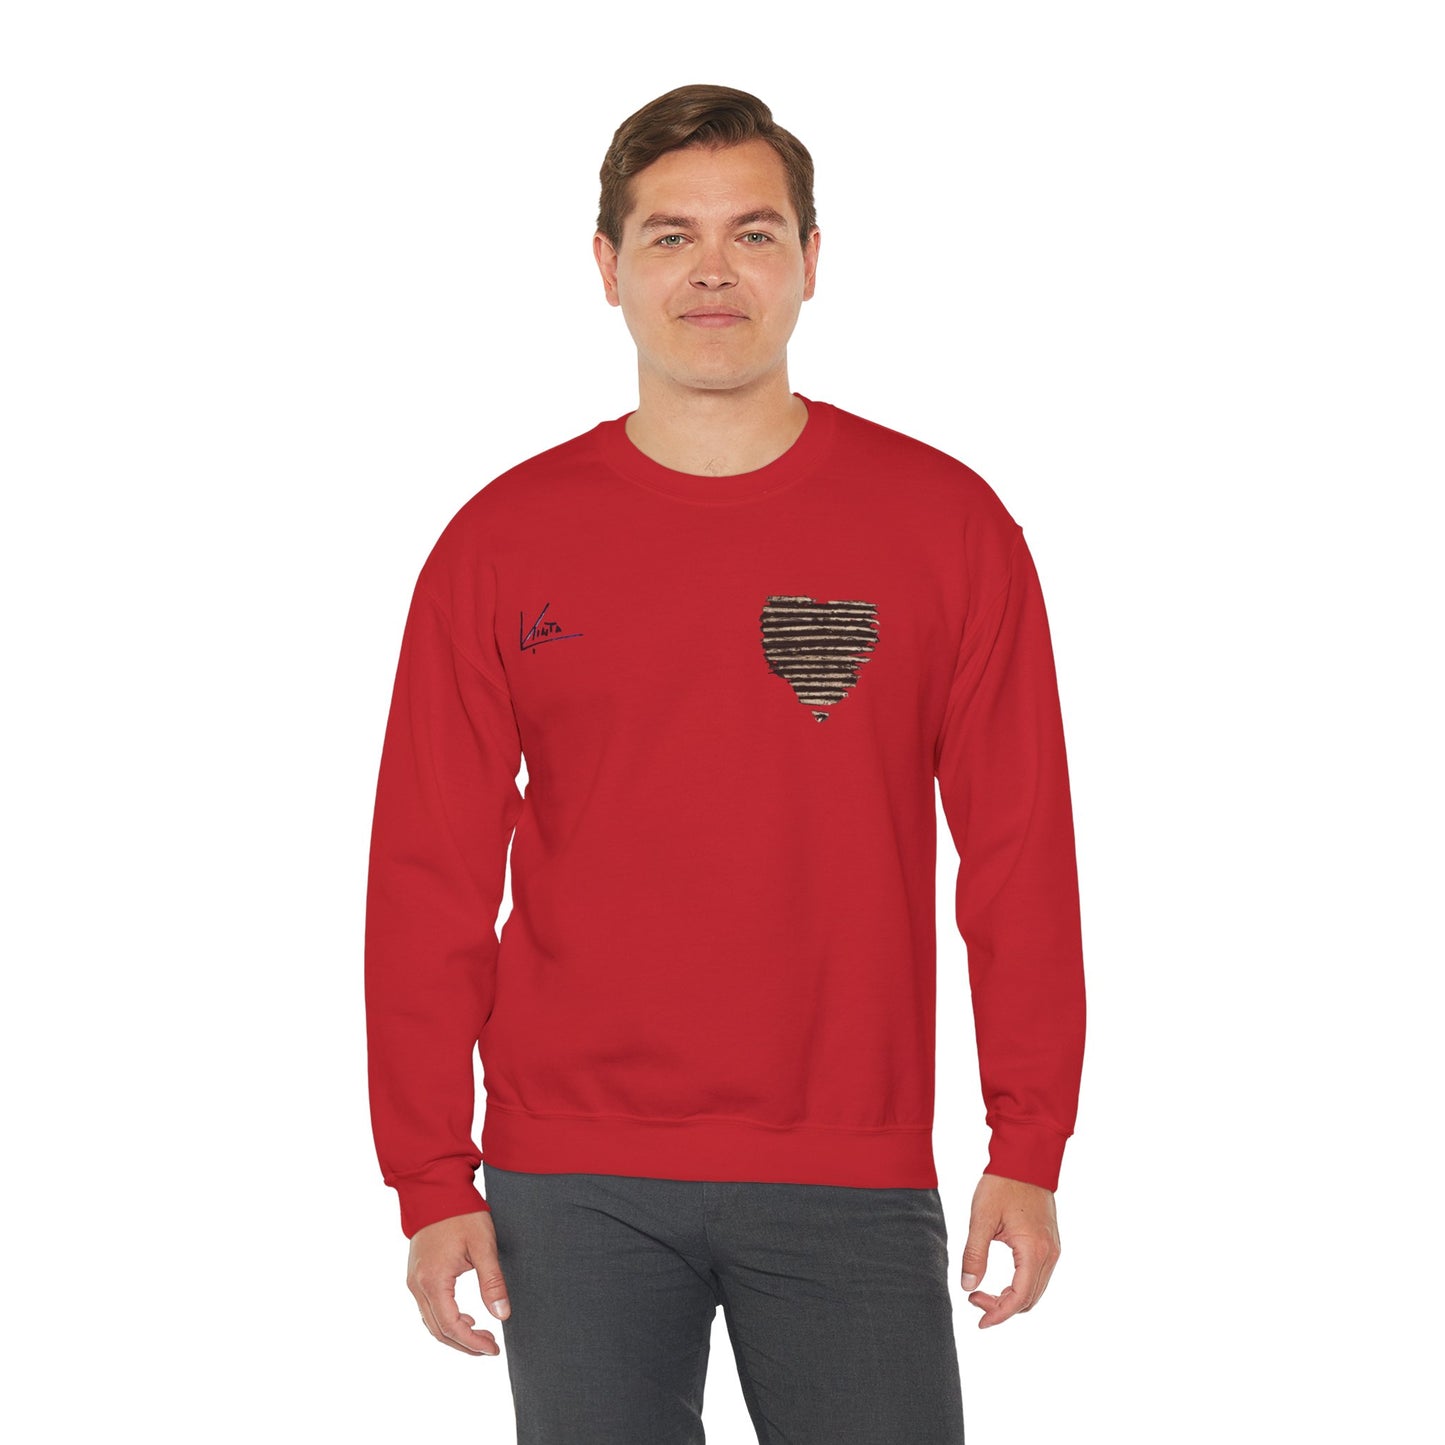 Valentine U.T.S Unisex Sweatshirt